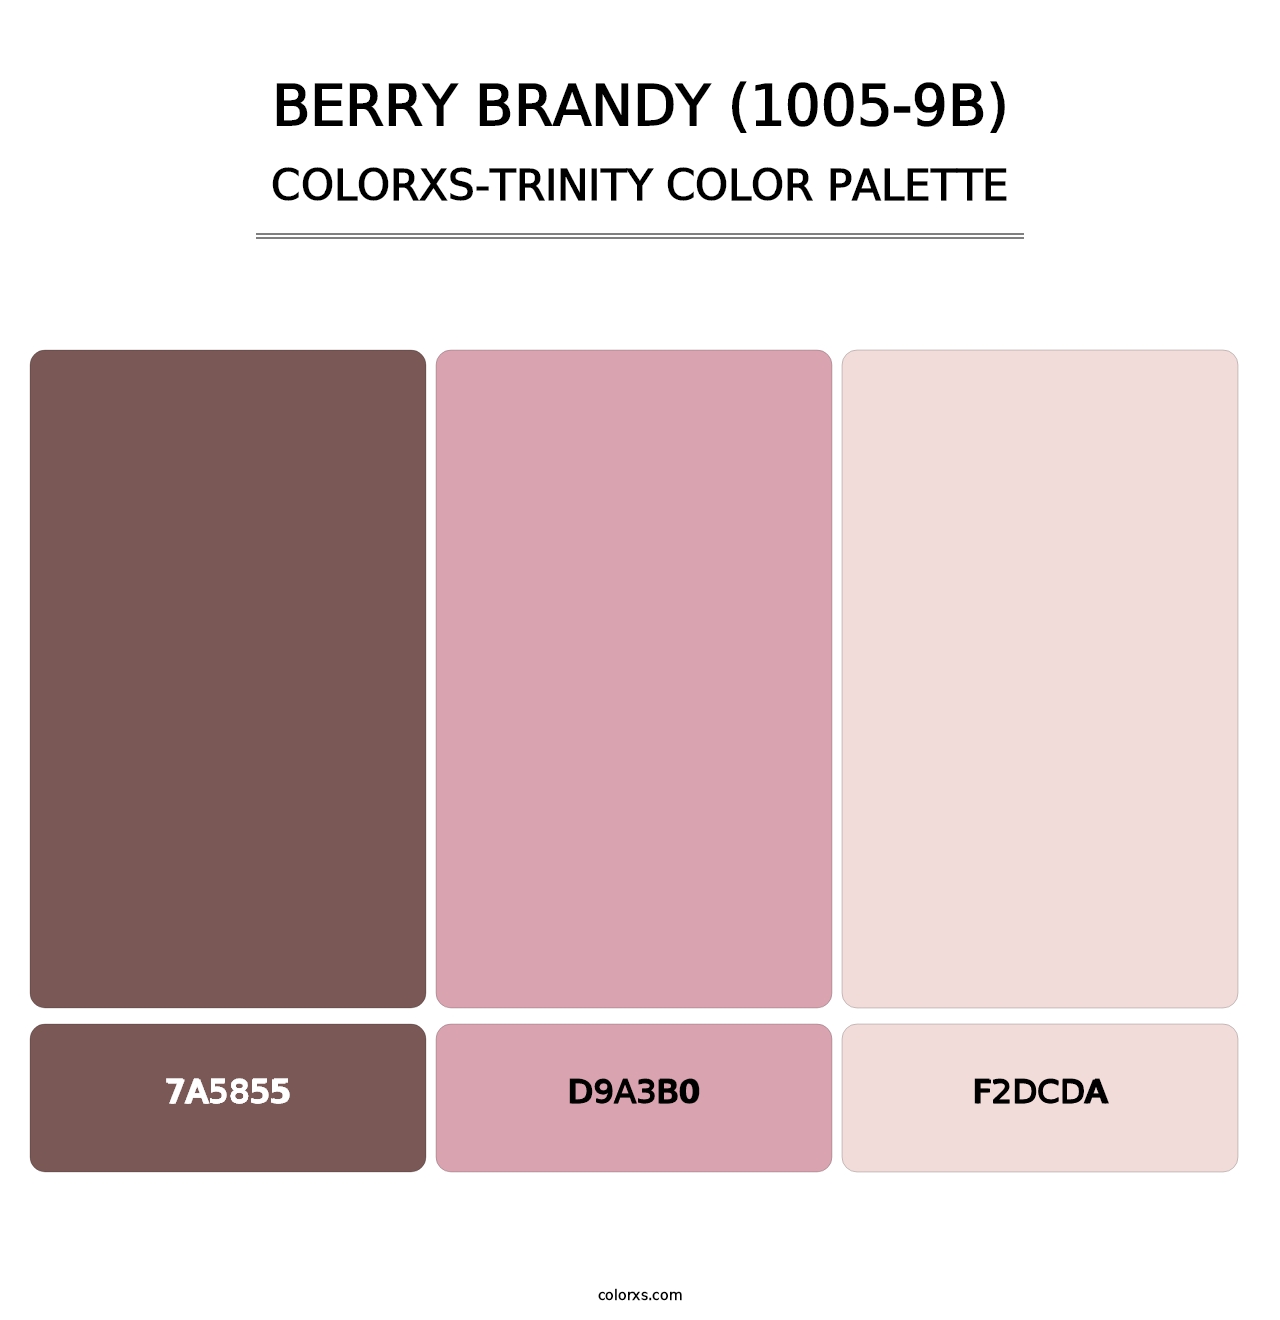 Berry Brandy (1005-9B) - Colorxs Trinity Palette